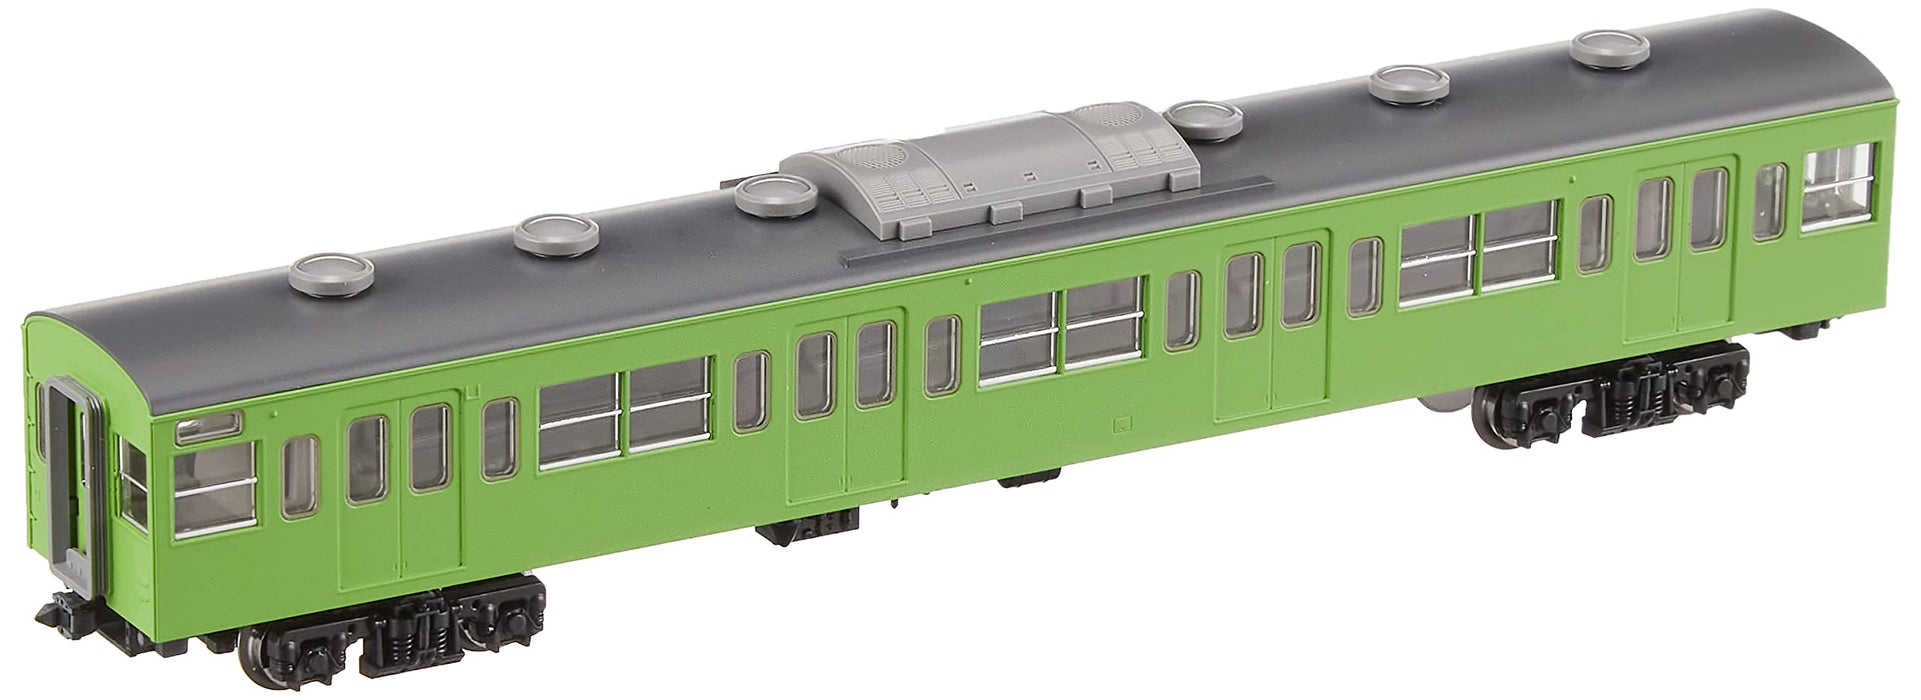 Tomytec Tomix N Gauge Saha 103 Railway Model Train Uguis 9310 Limited Edition